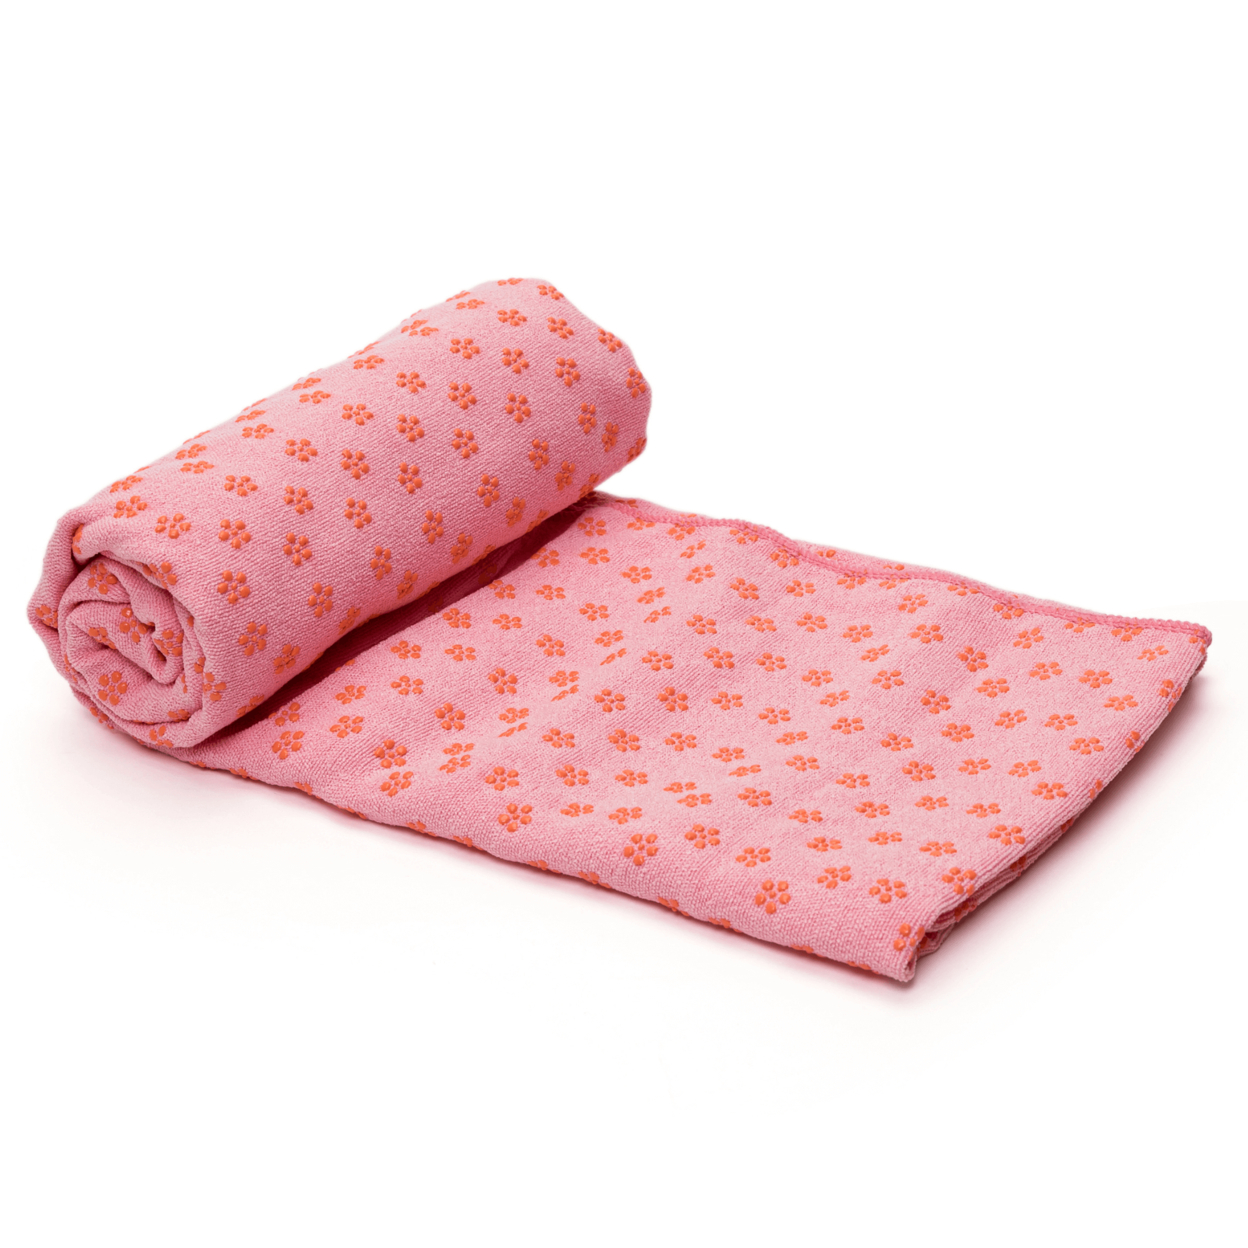 Premium Absorption Hot Yoga Mat Towel With Slip-Resistant Grip Dots - Light Purple